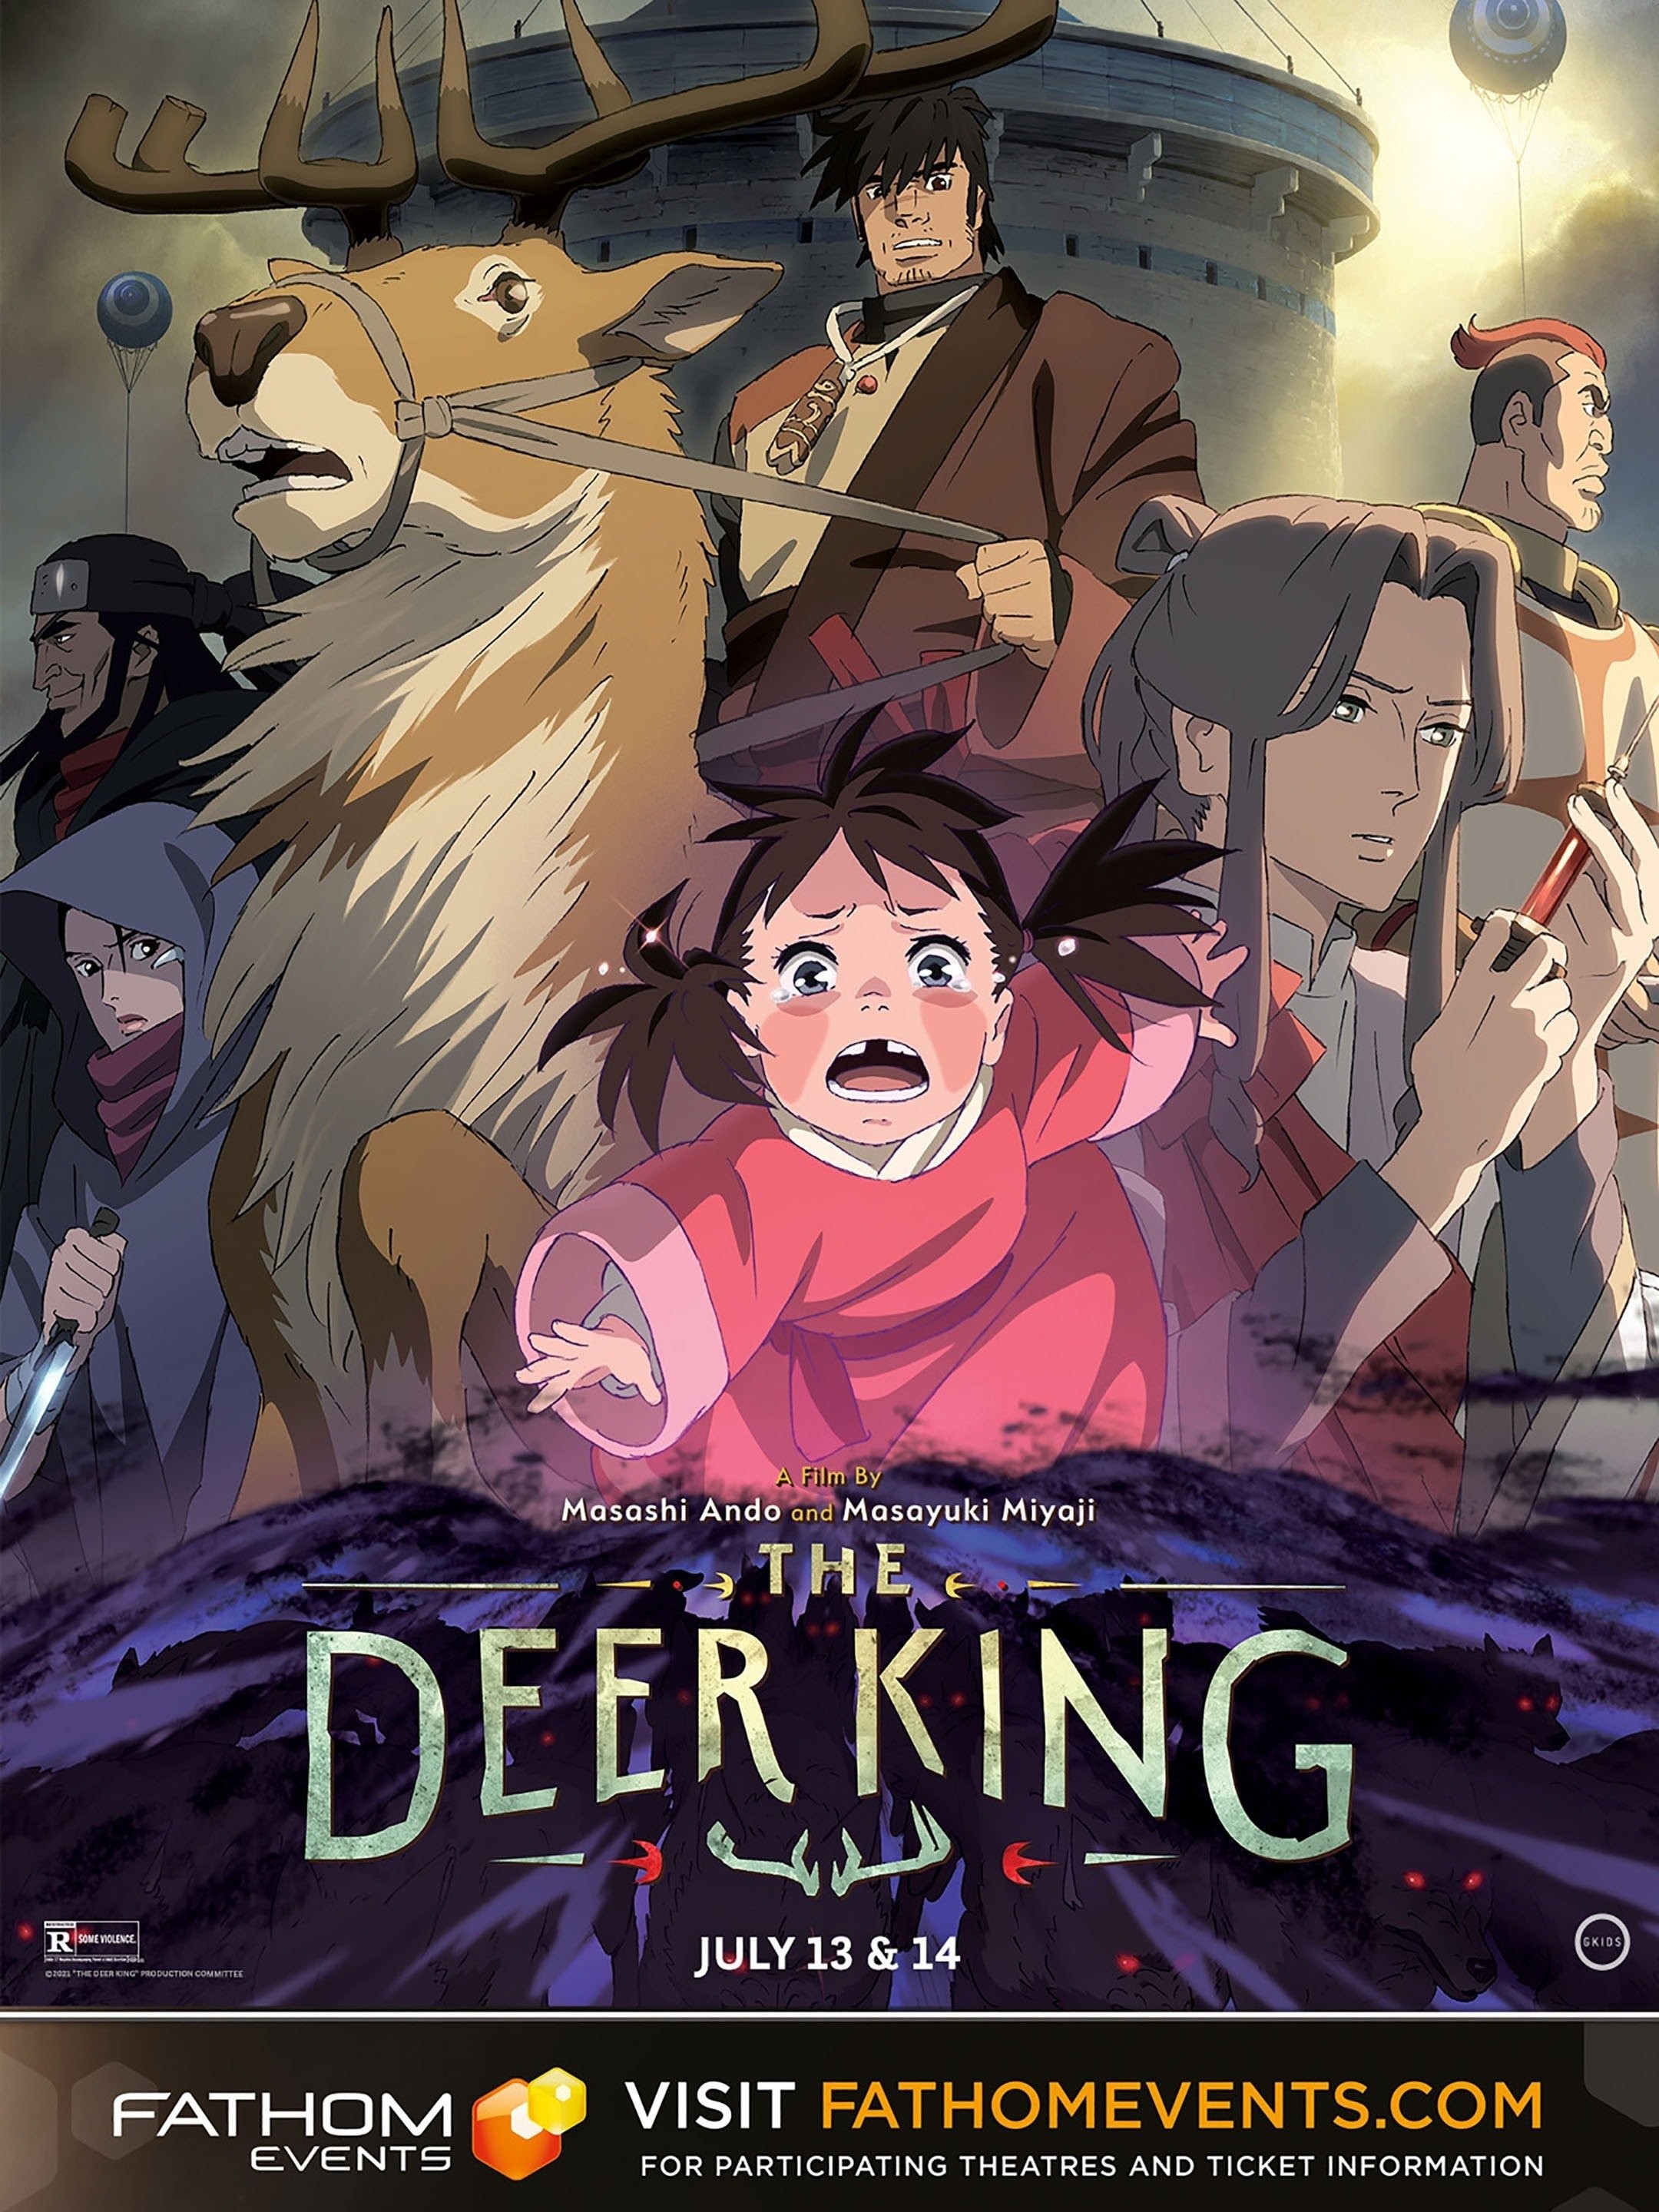 The Deer King - Official Trailer